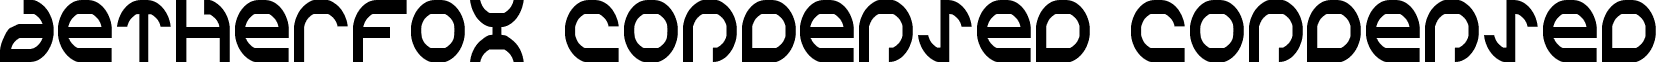 Aetherfox Condensed Condensed font - Aethv2c.ttf